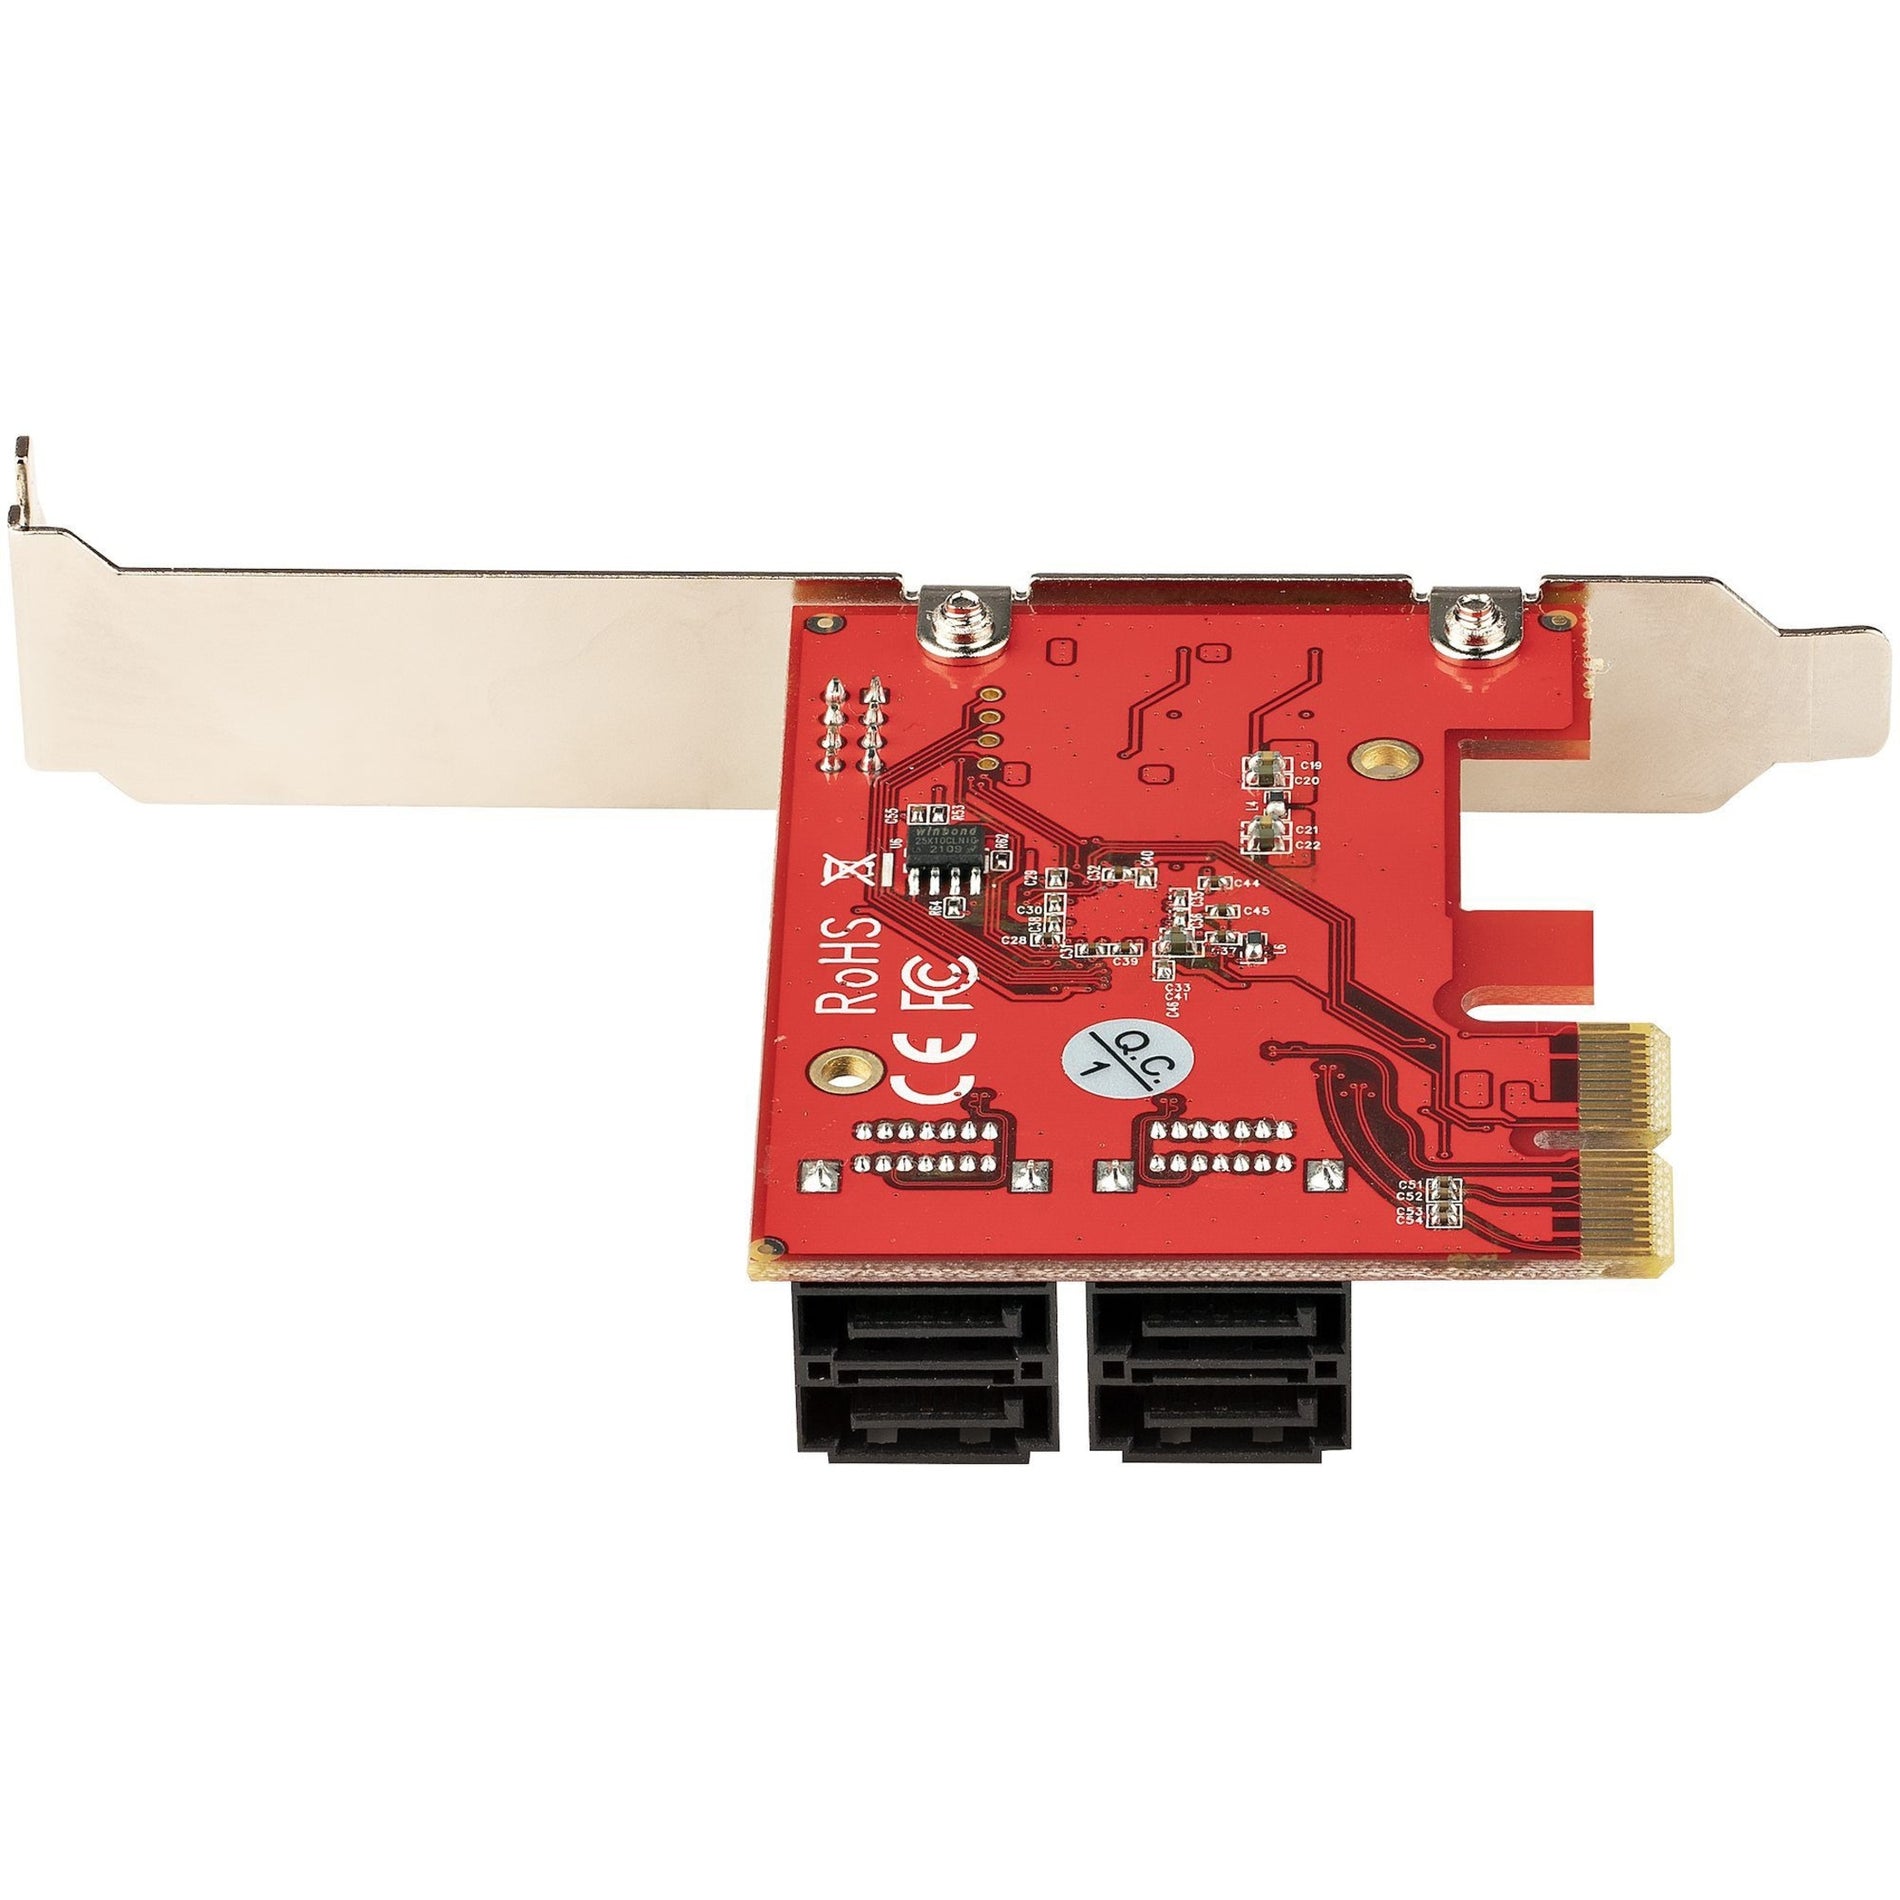 StarTech.com 4P6G-PCIE-SATA-CARD PCIe SATA Card, 4 Port PCIe SATA Expansion Card, 6Gbps, Stacked Connectors, Non-RAID, PCI Express to SATA Converter/Adapter